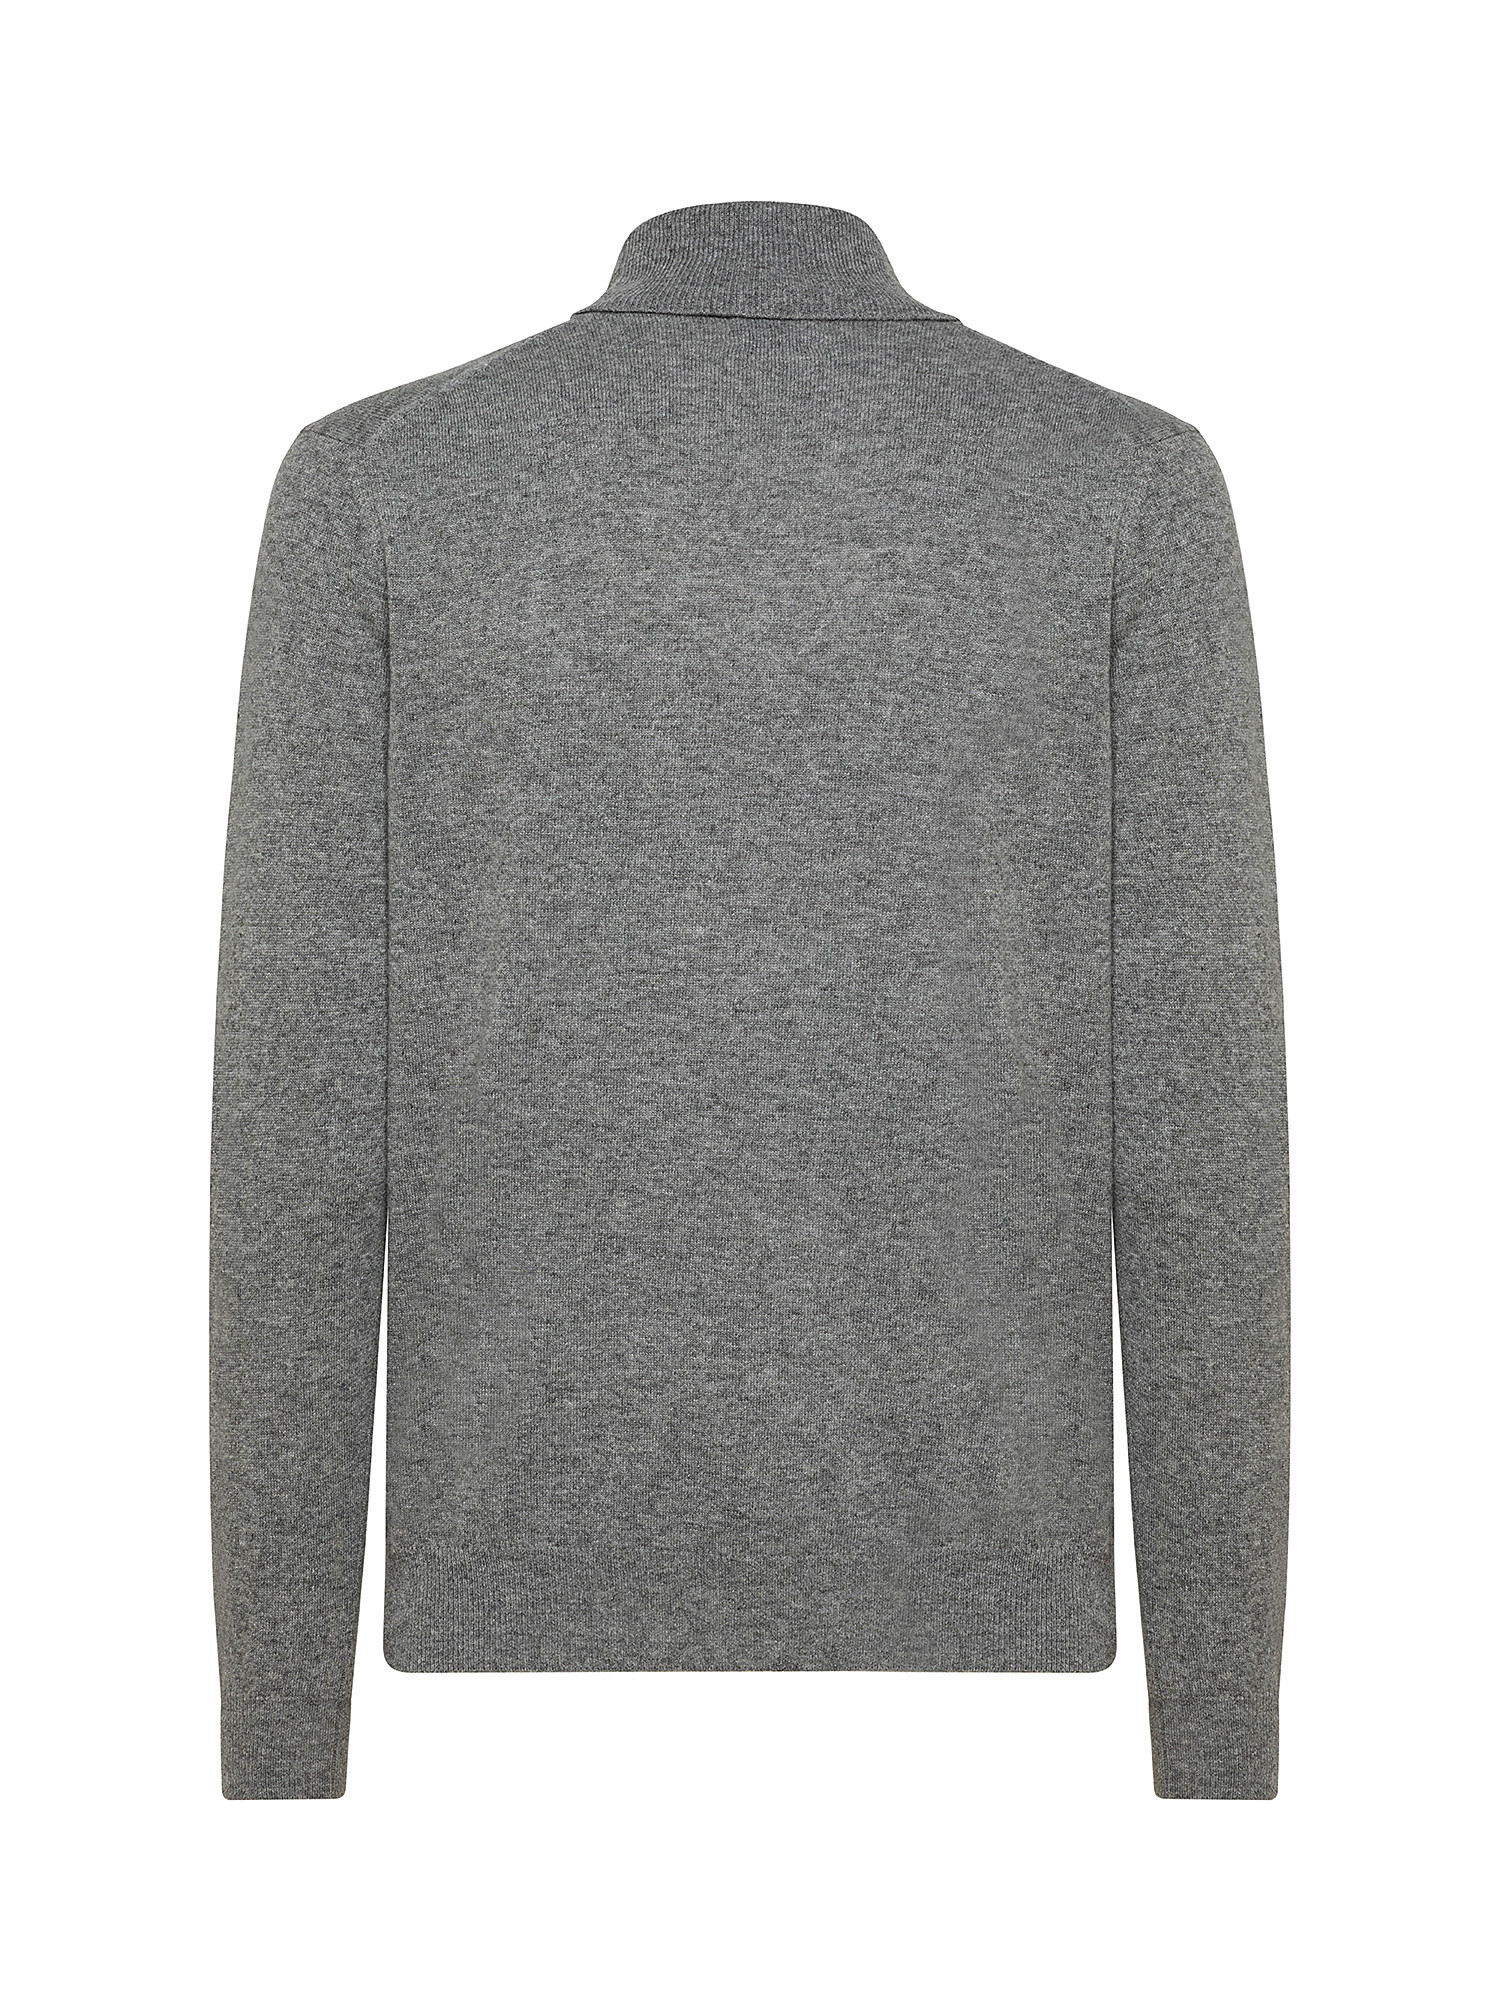 Cashmere Blend turtleneck with noble fibers, Grey, large image number 1